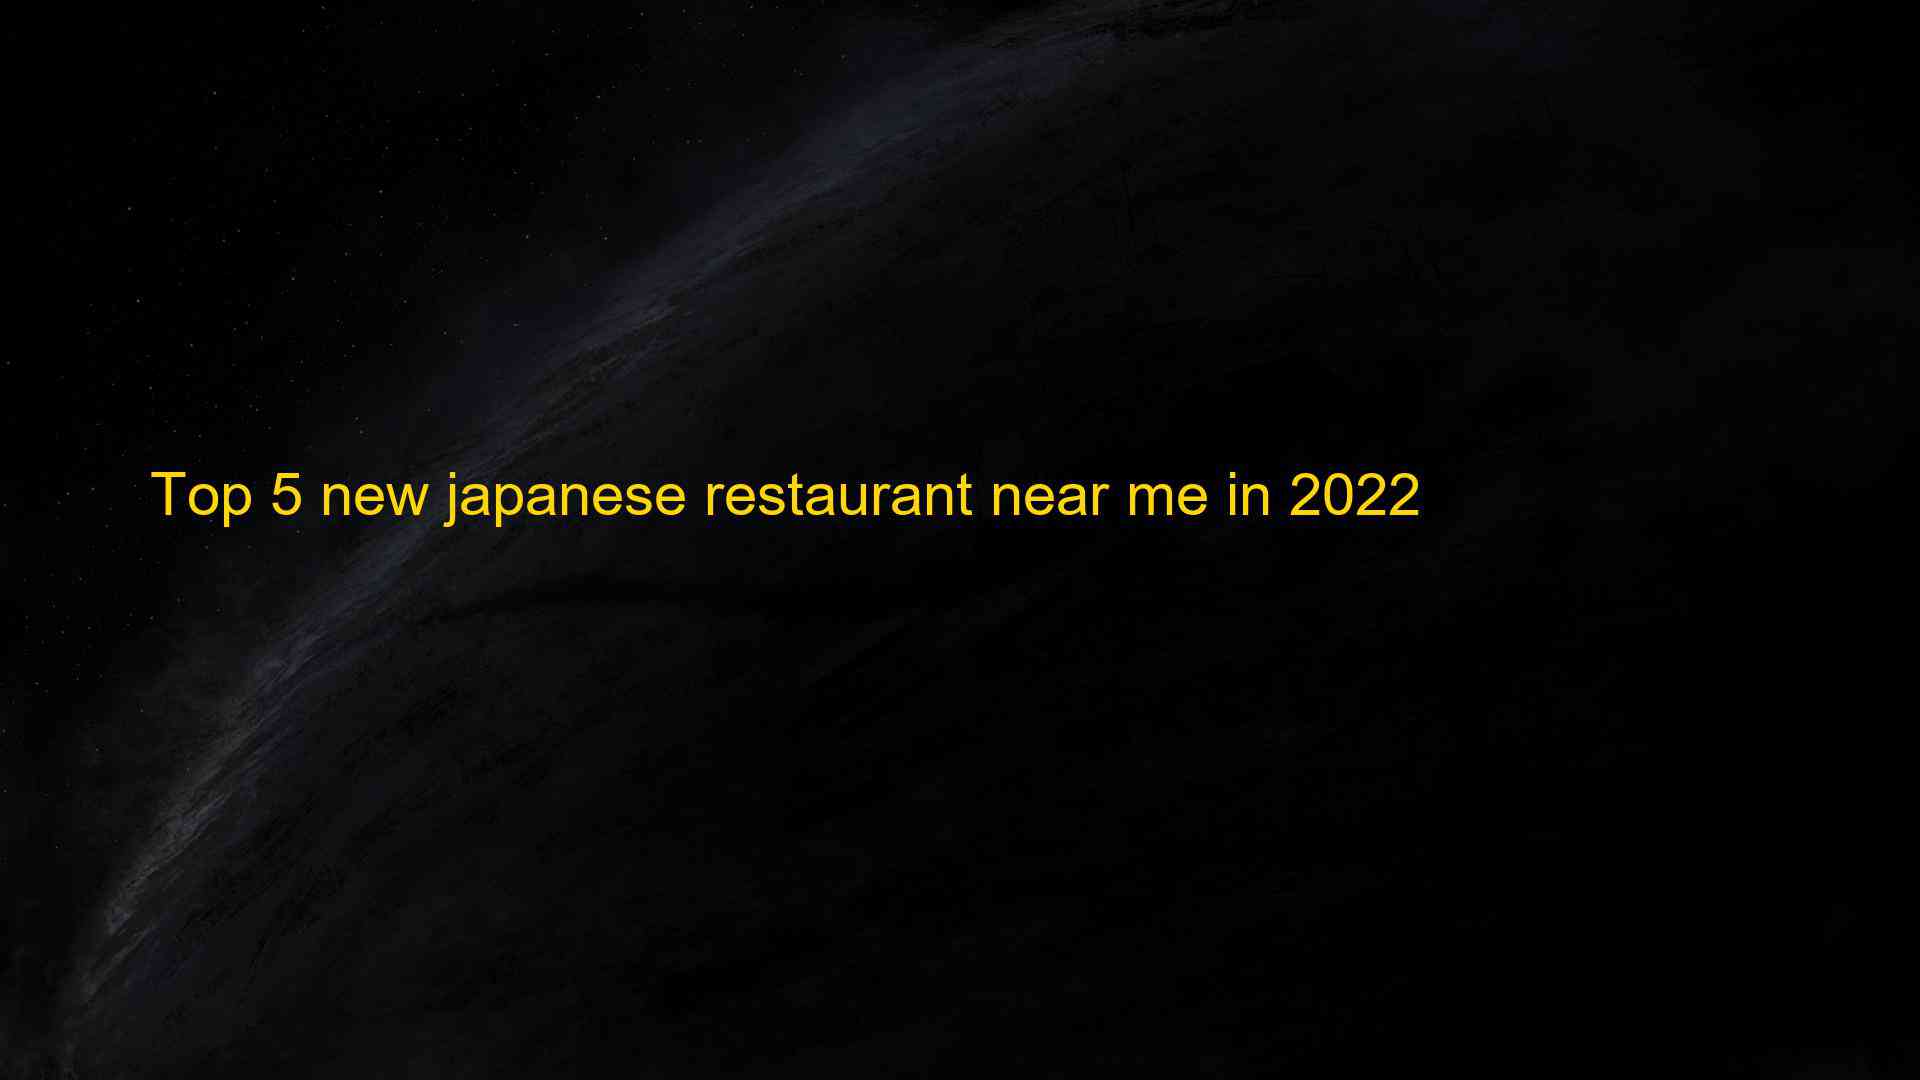 Top 5 new japanese restaurant near me in 2022 1663524557